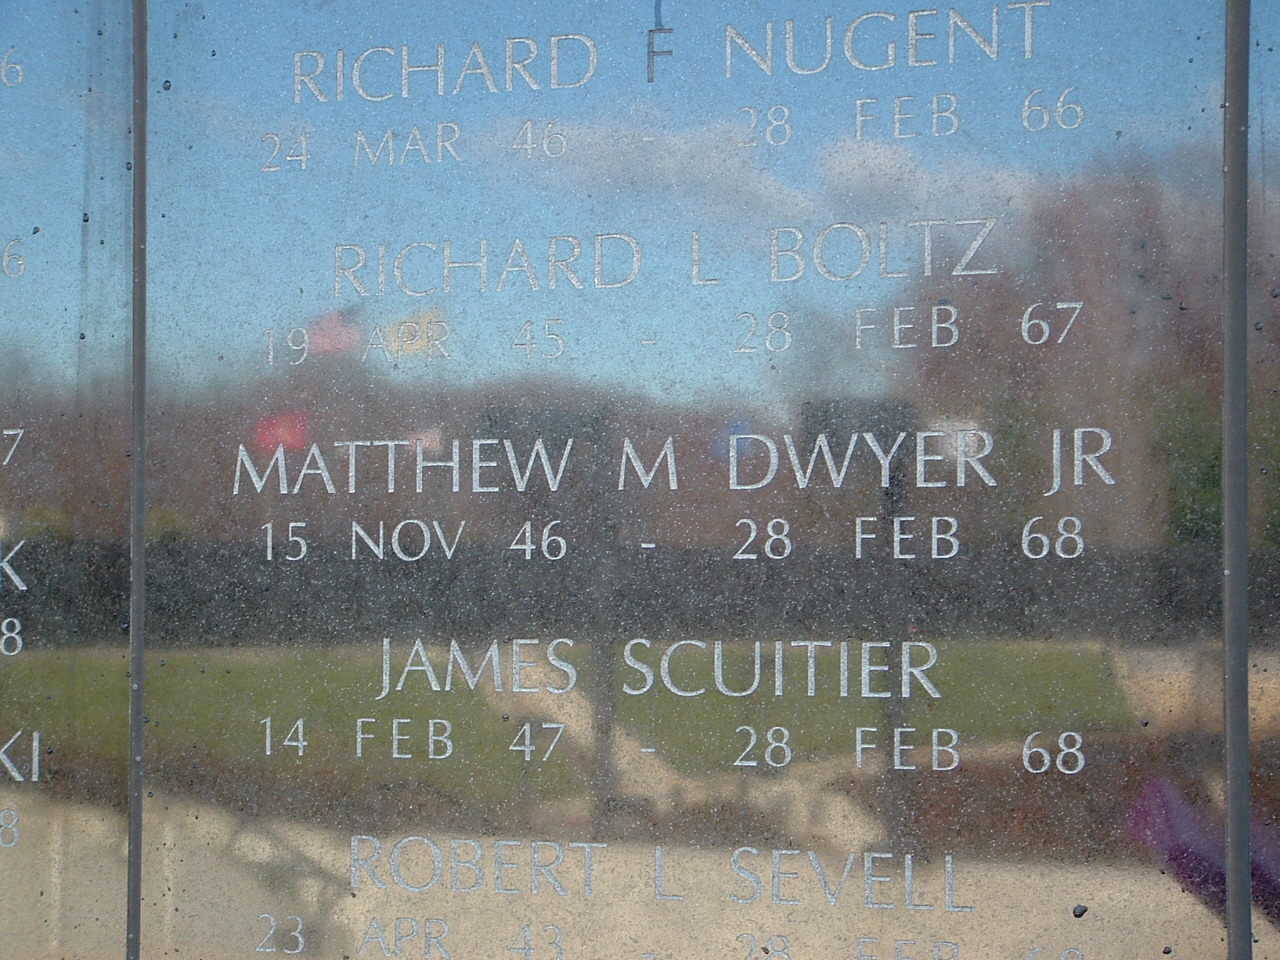 Matthew M. Dwyer Jr. - NJ Vietnam Memorial, photo  2004 by Anthony Buccino